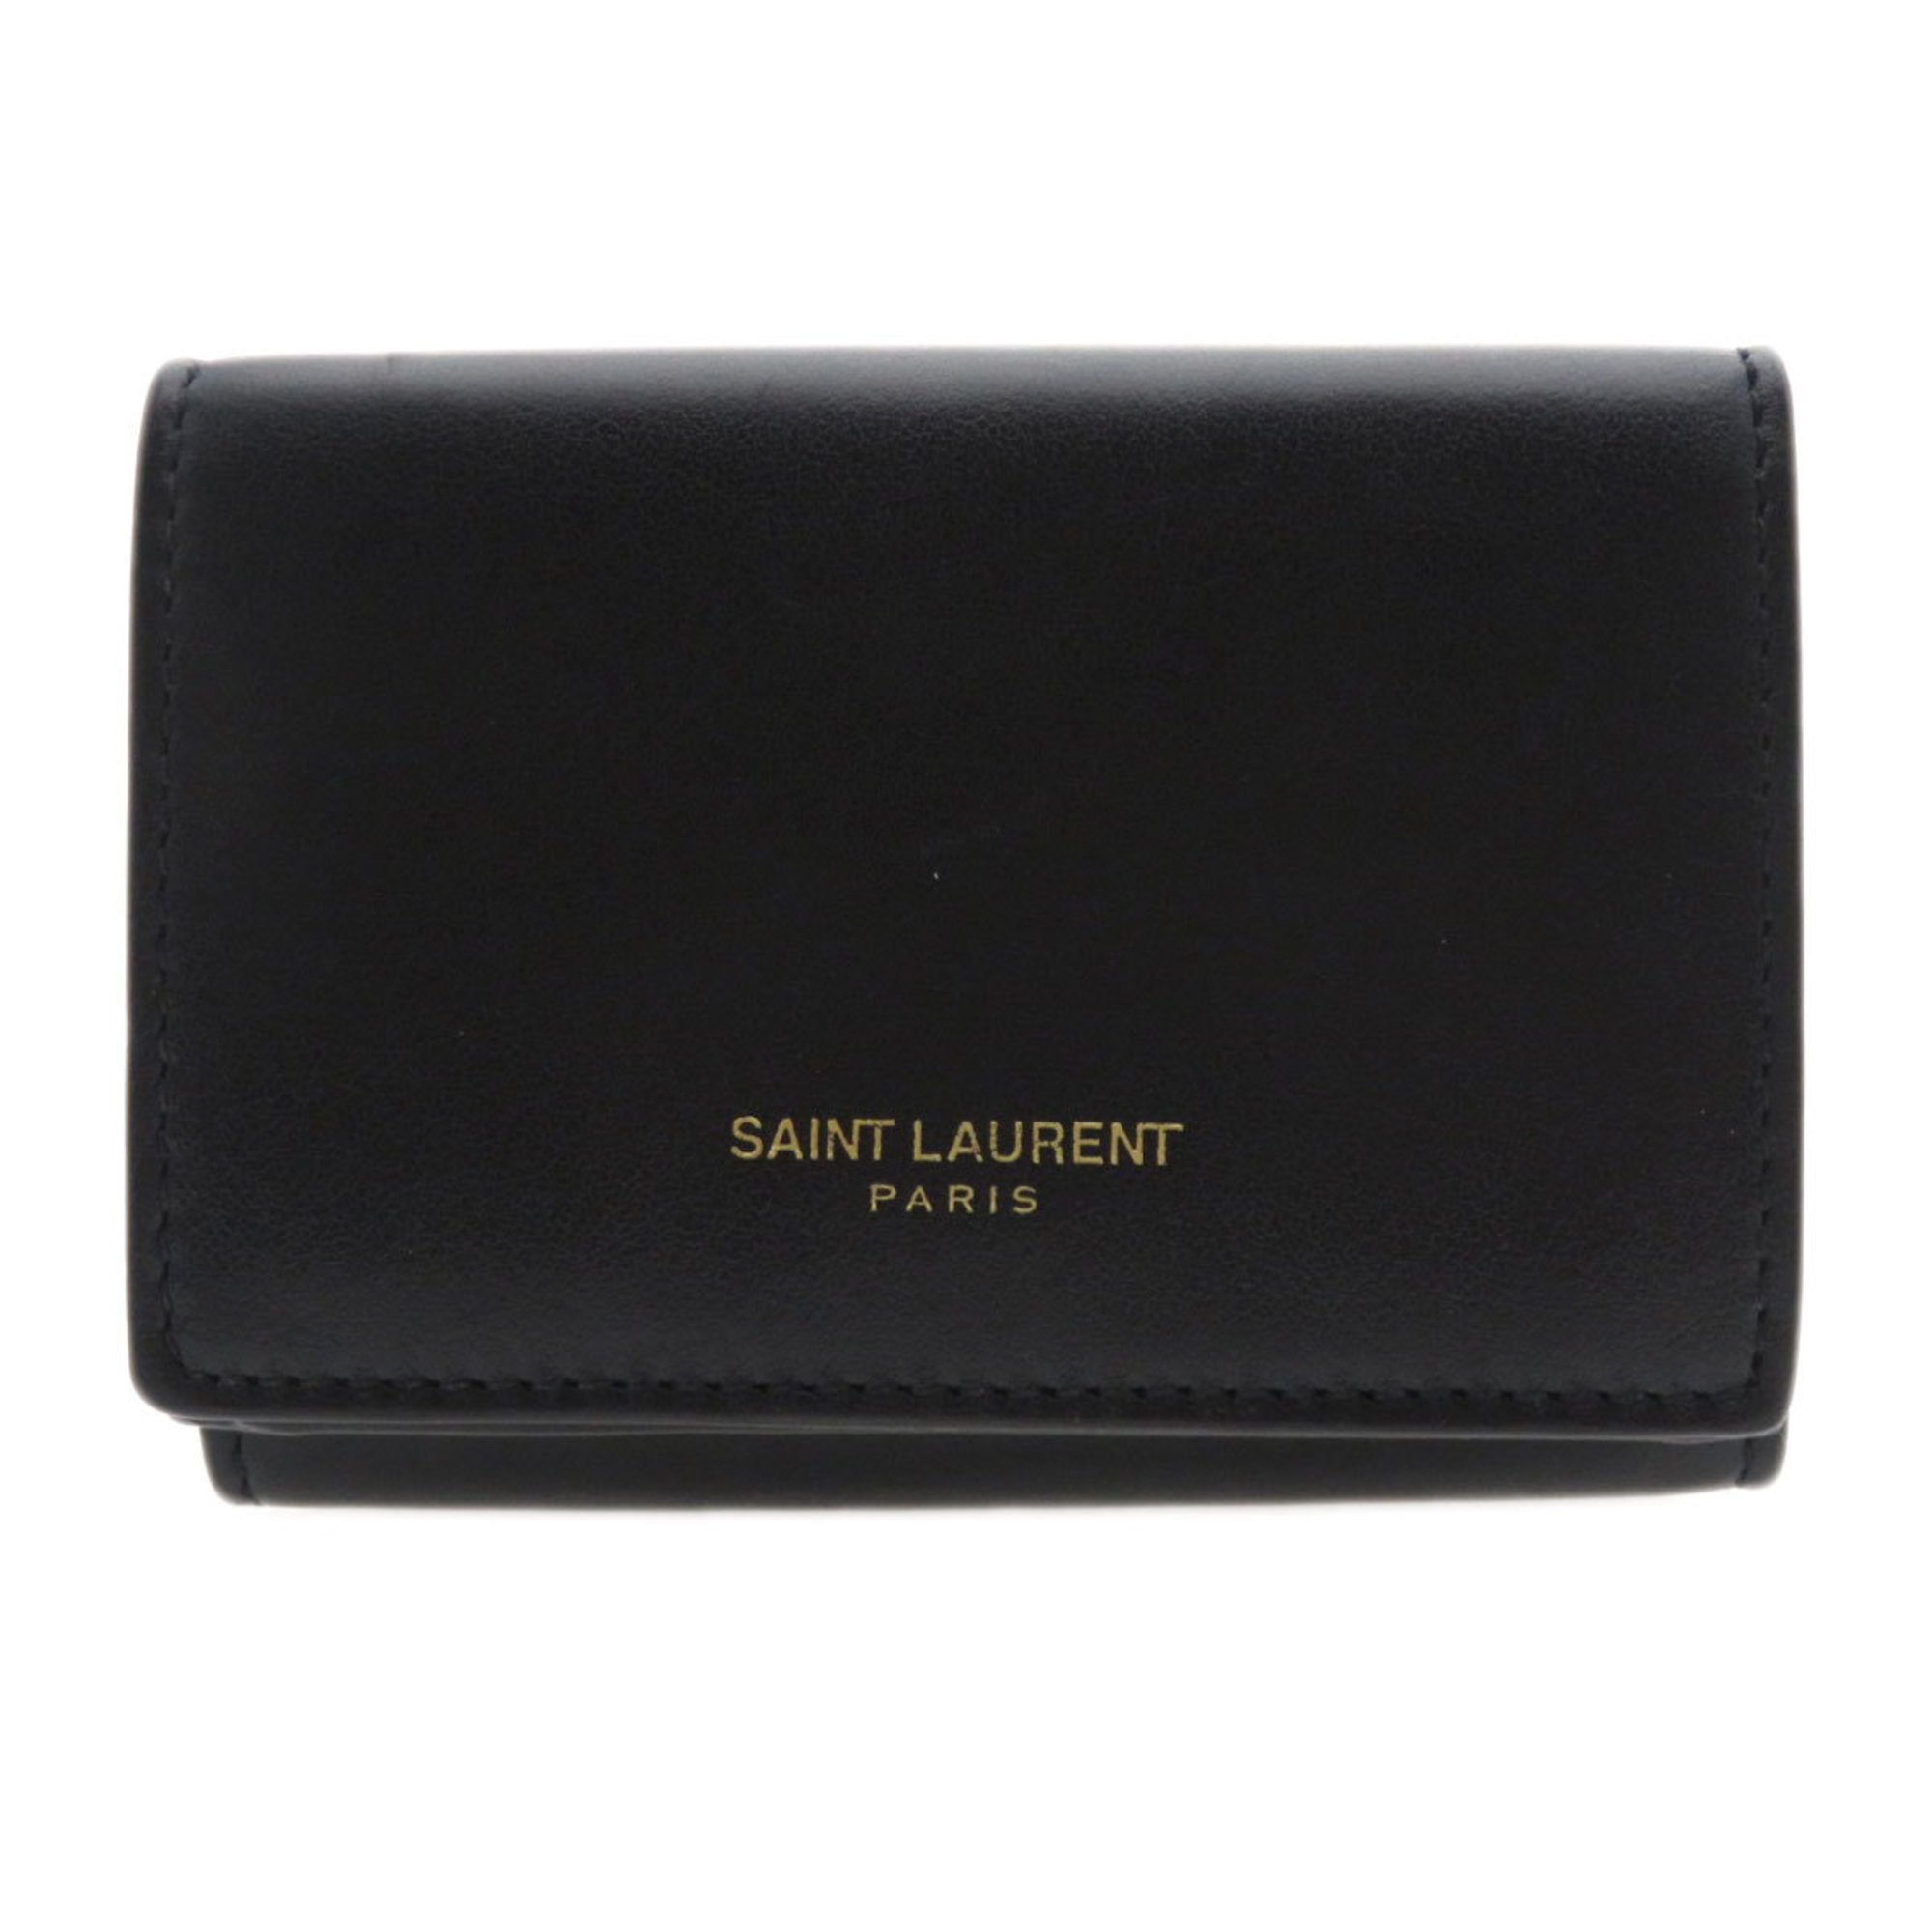 Saint Laurent motif wallet, tri-fold, bi-fold calf leather, women's